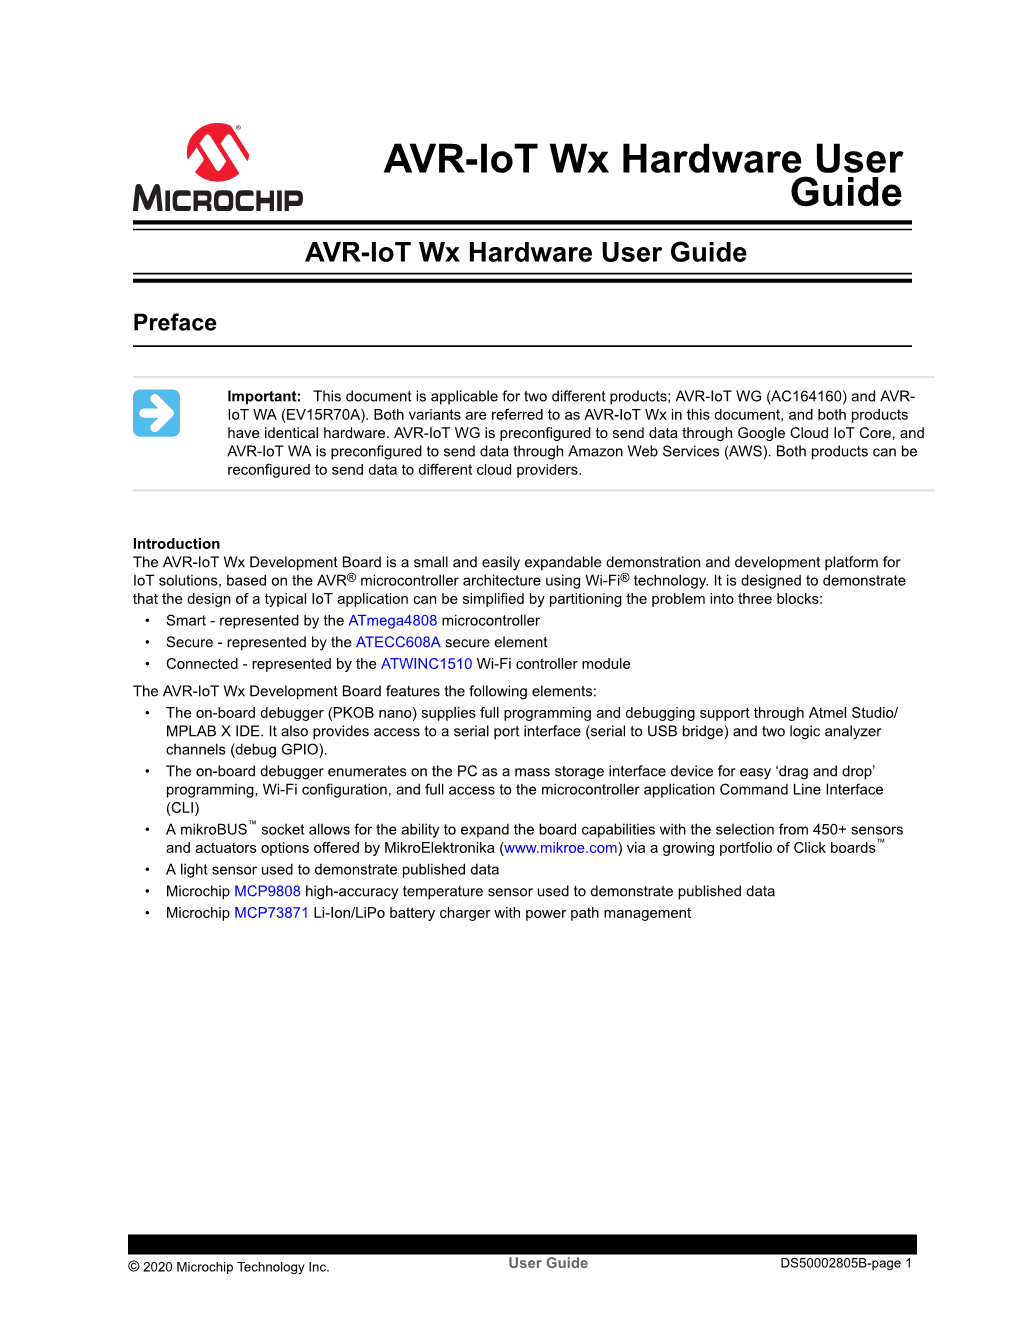 AVR-Iot Wx Hardware User Guide AVR-Iot Wx Hardware User Guide